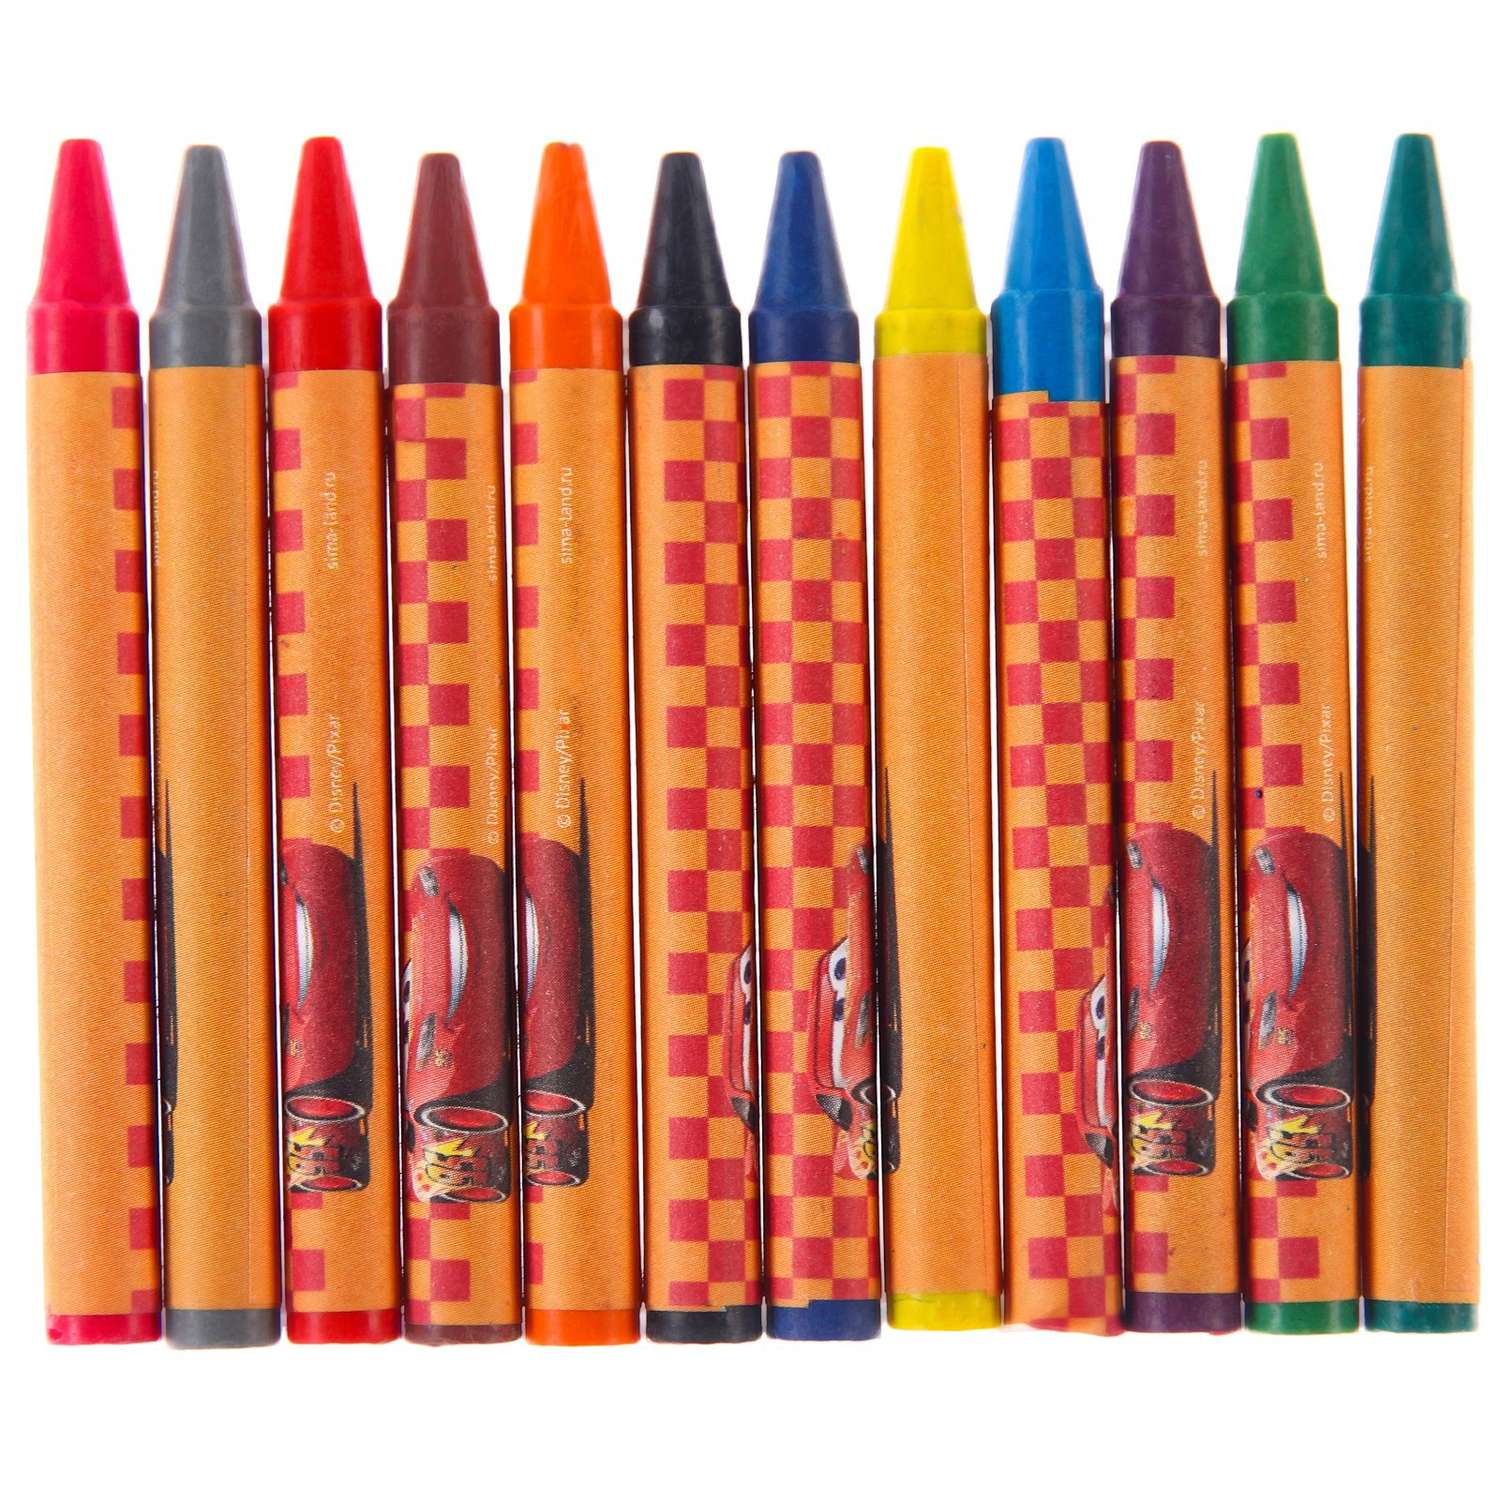 Восковые Disney карандаши набор 12 цветов Тачки - фото 2